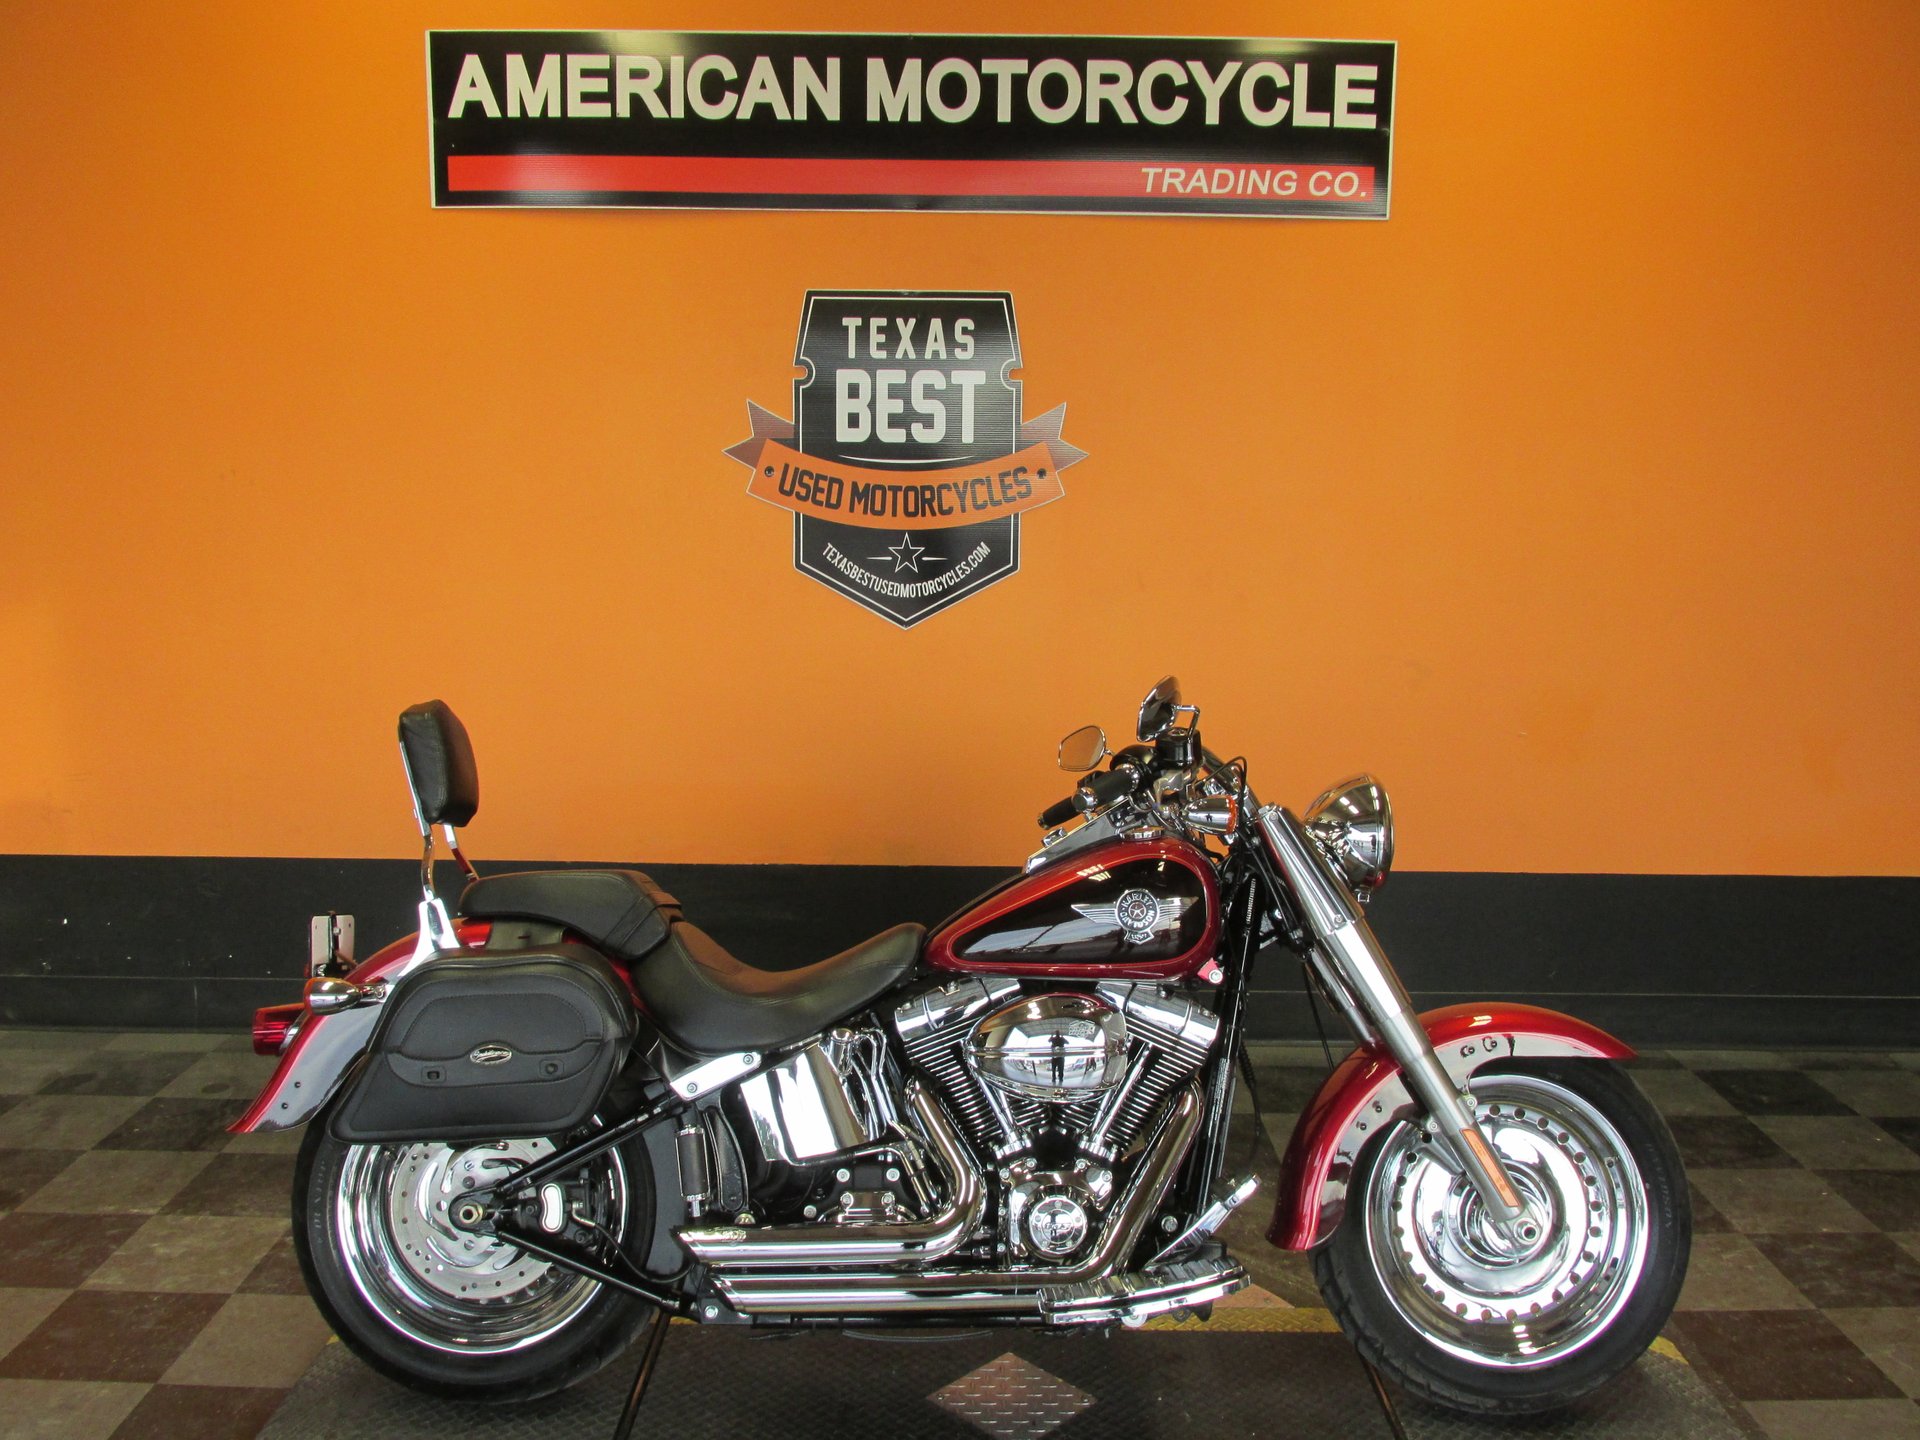 2013 Harley Davidson Softail Fat Boy American Motorcycle Trading Company Used Harley Davidson Motorcycles